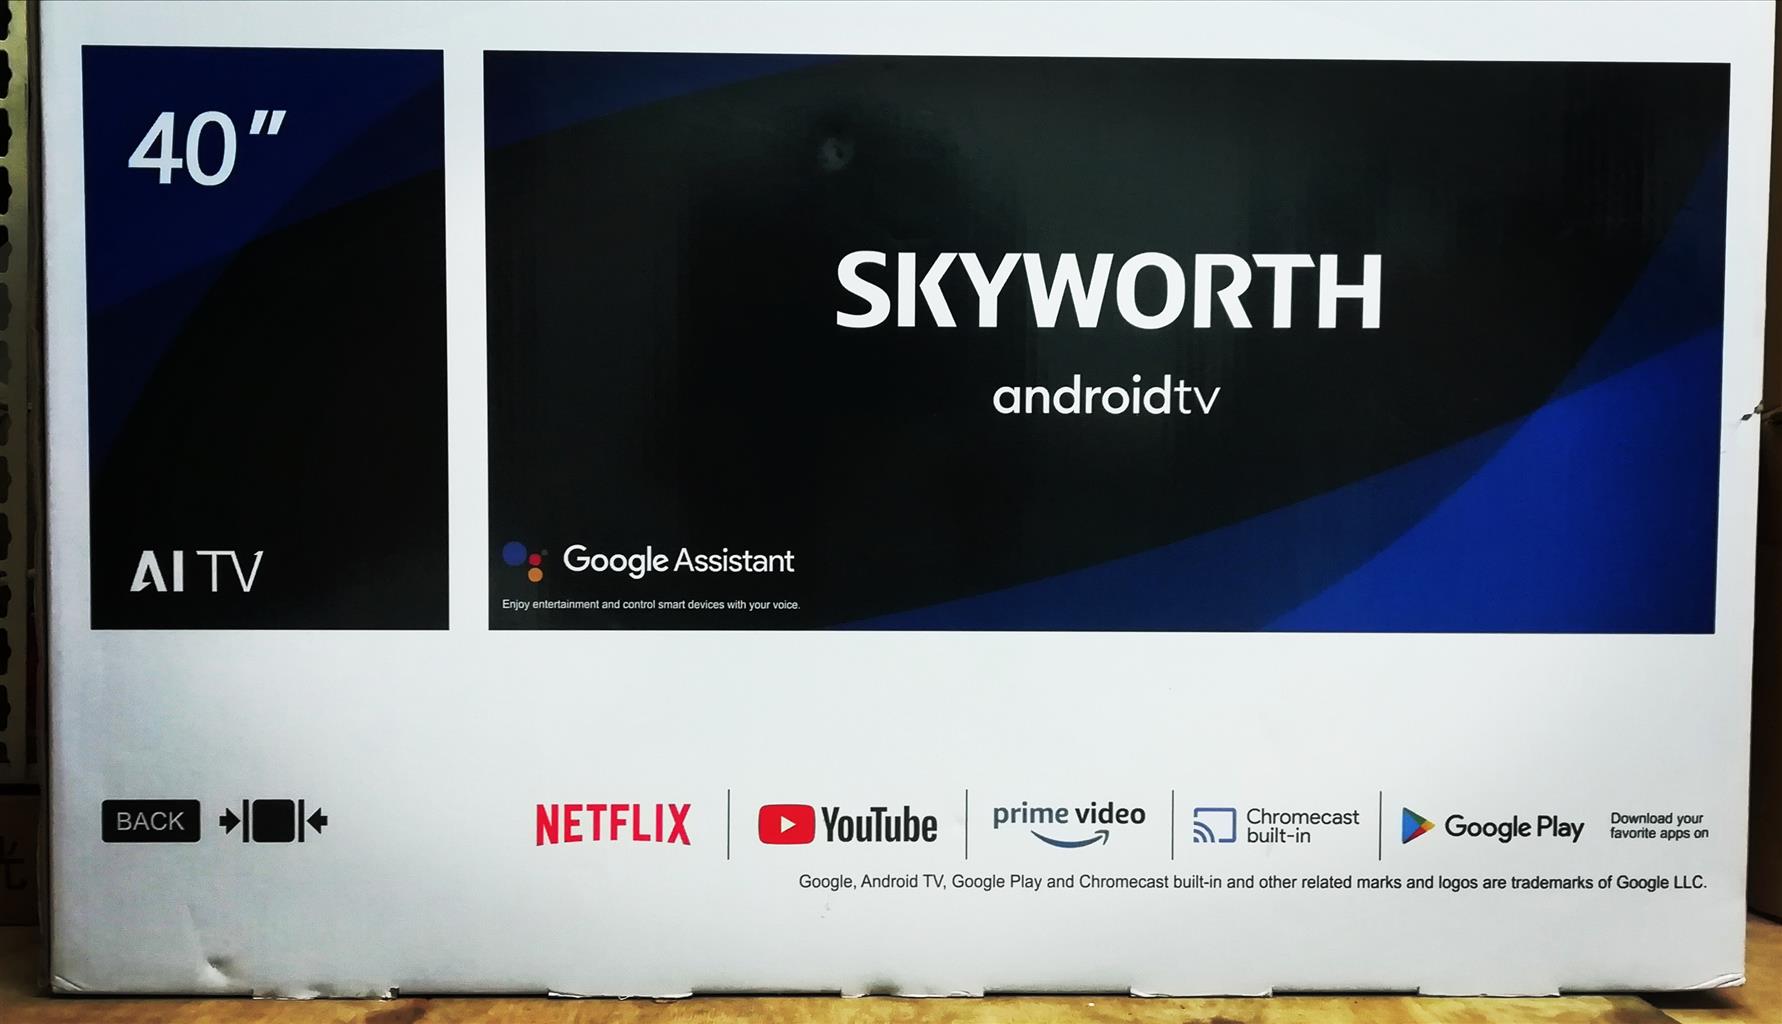 Skyworth 40" Android TV